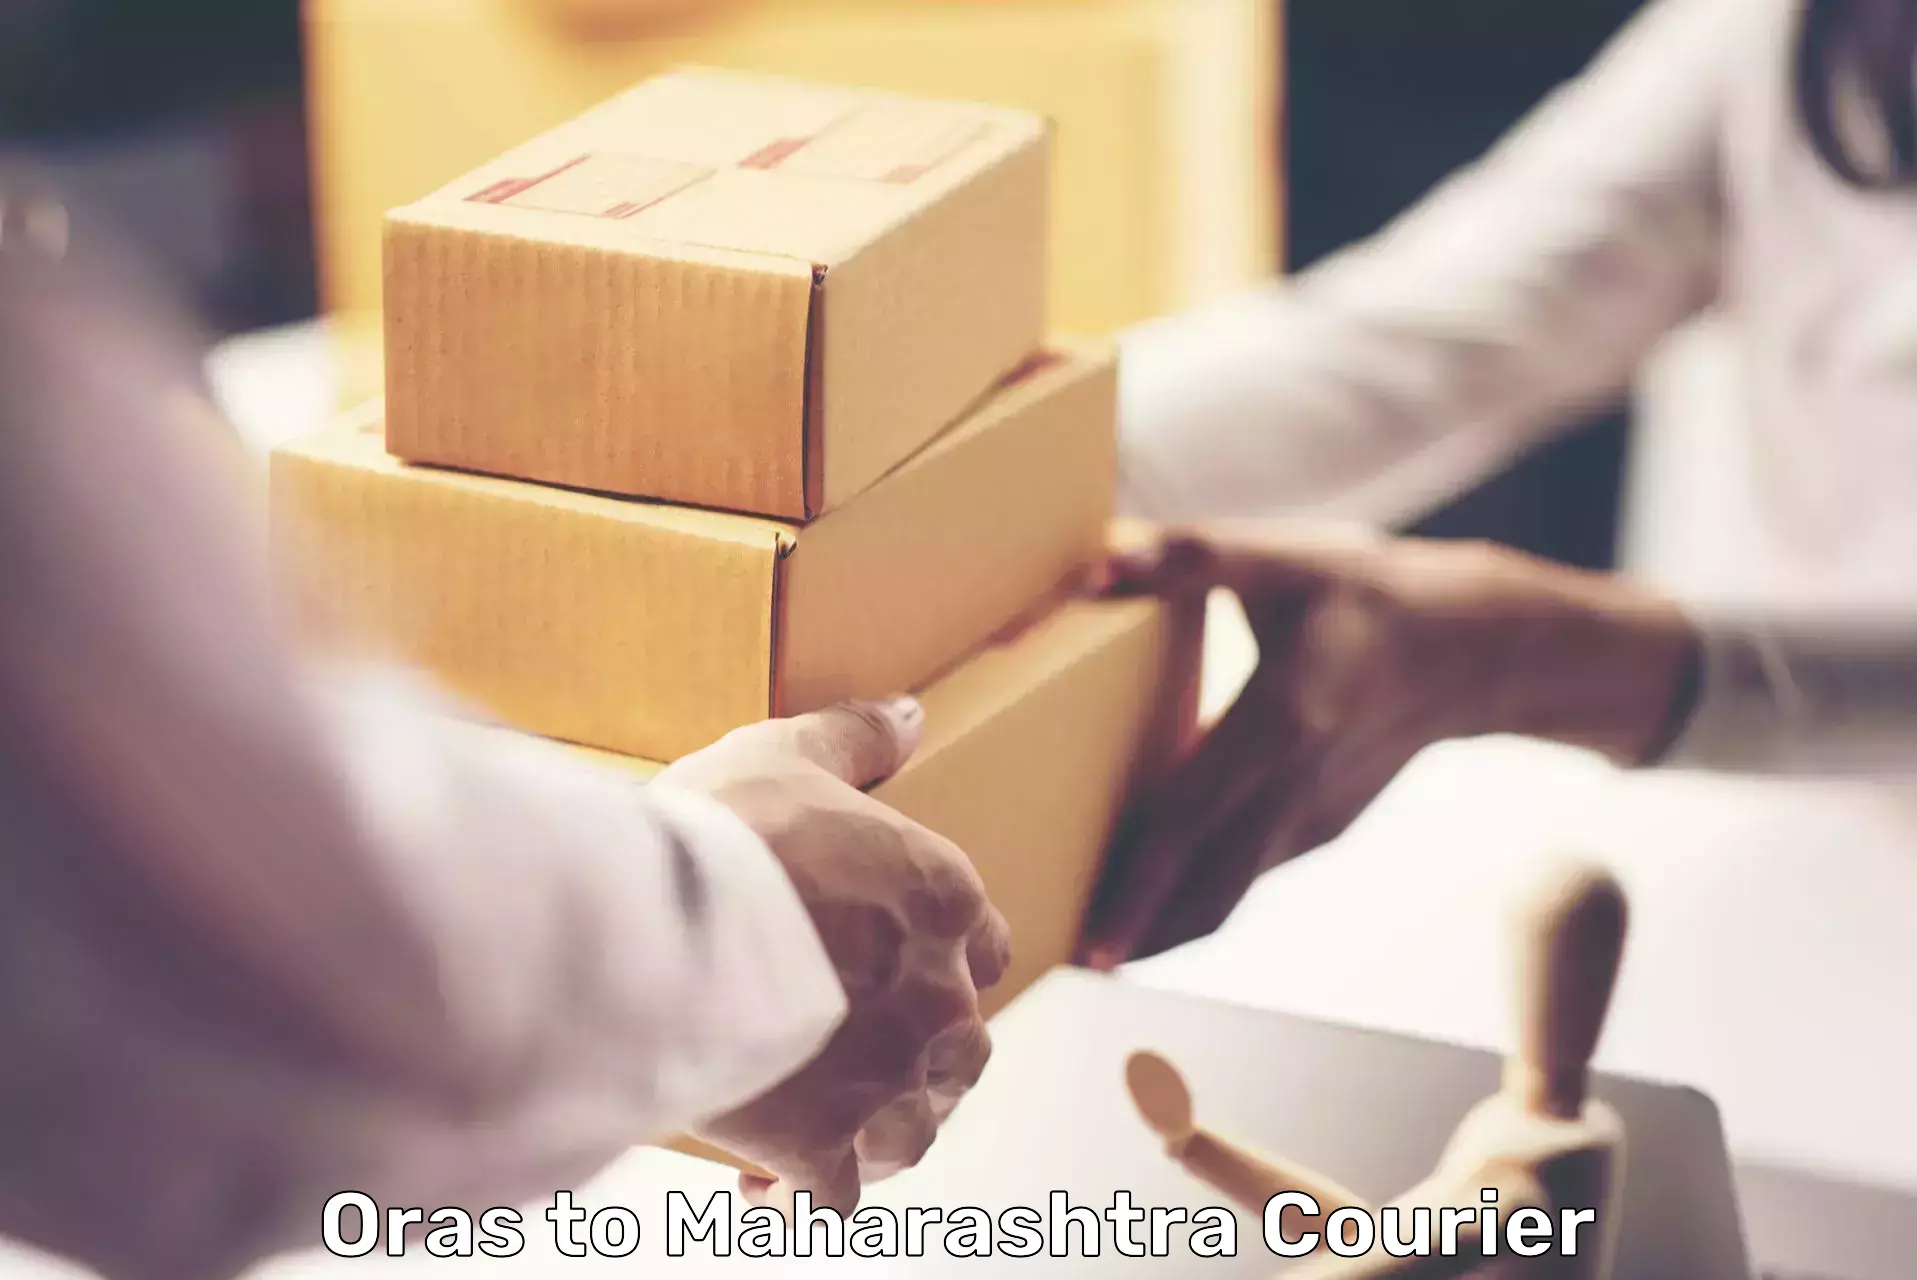 Courier service efficiency Oras to Dindori Nashik